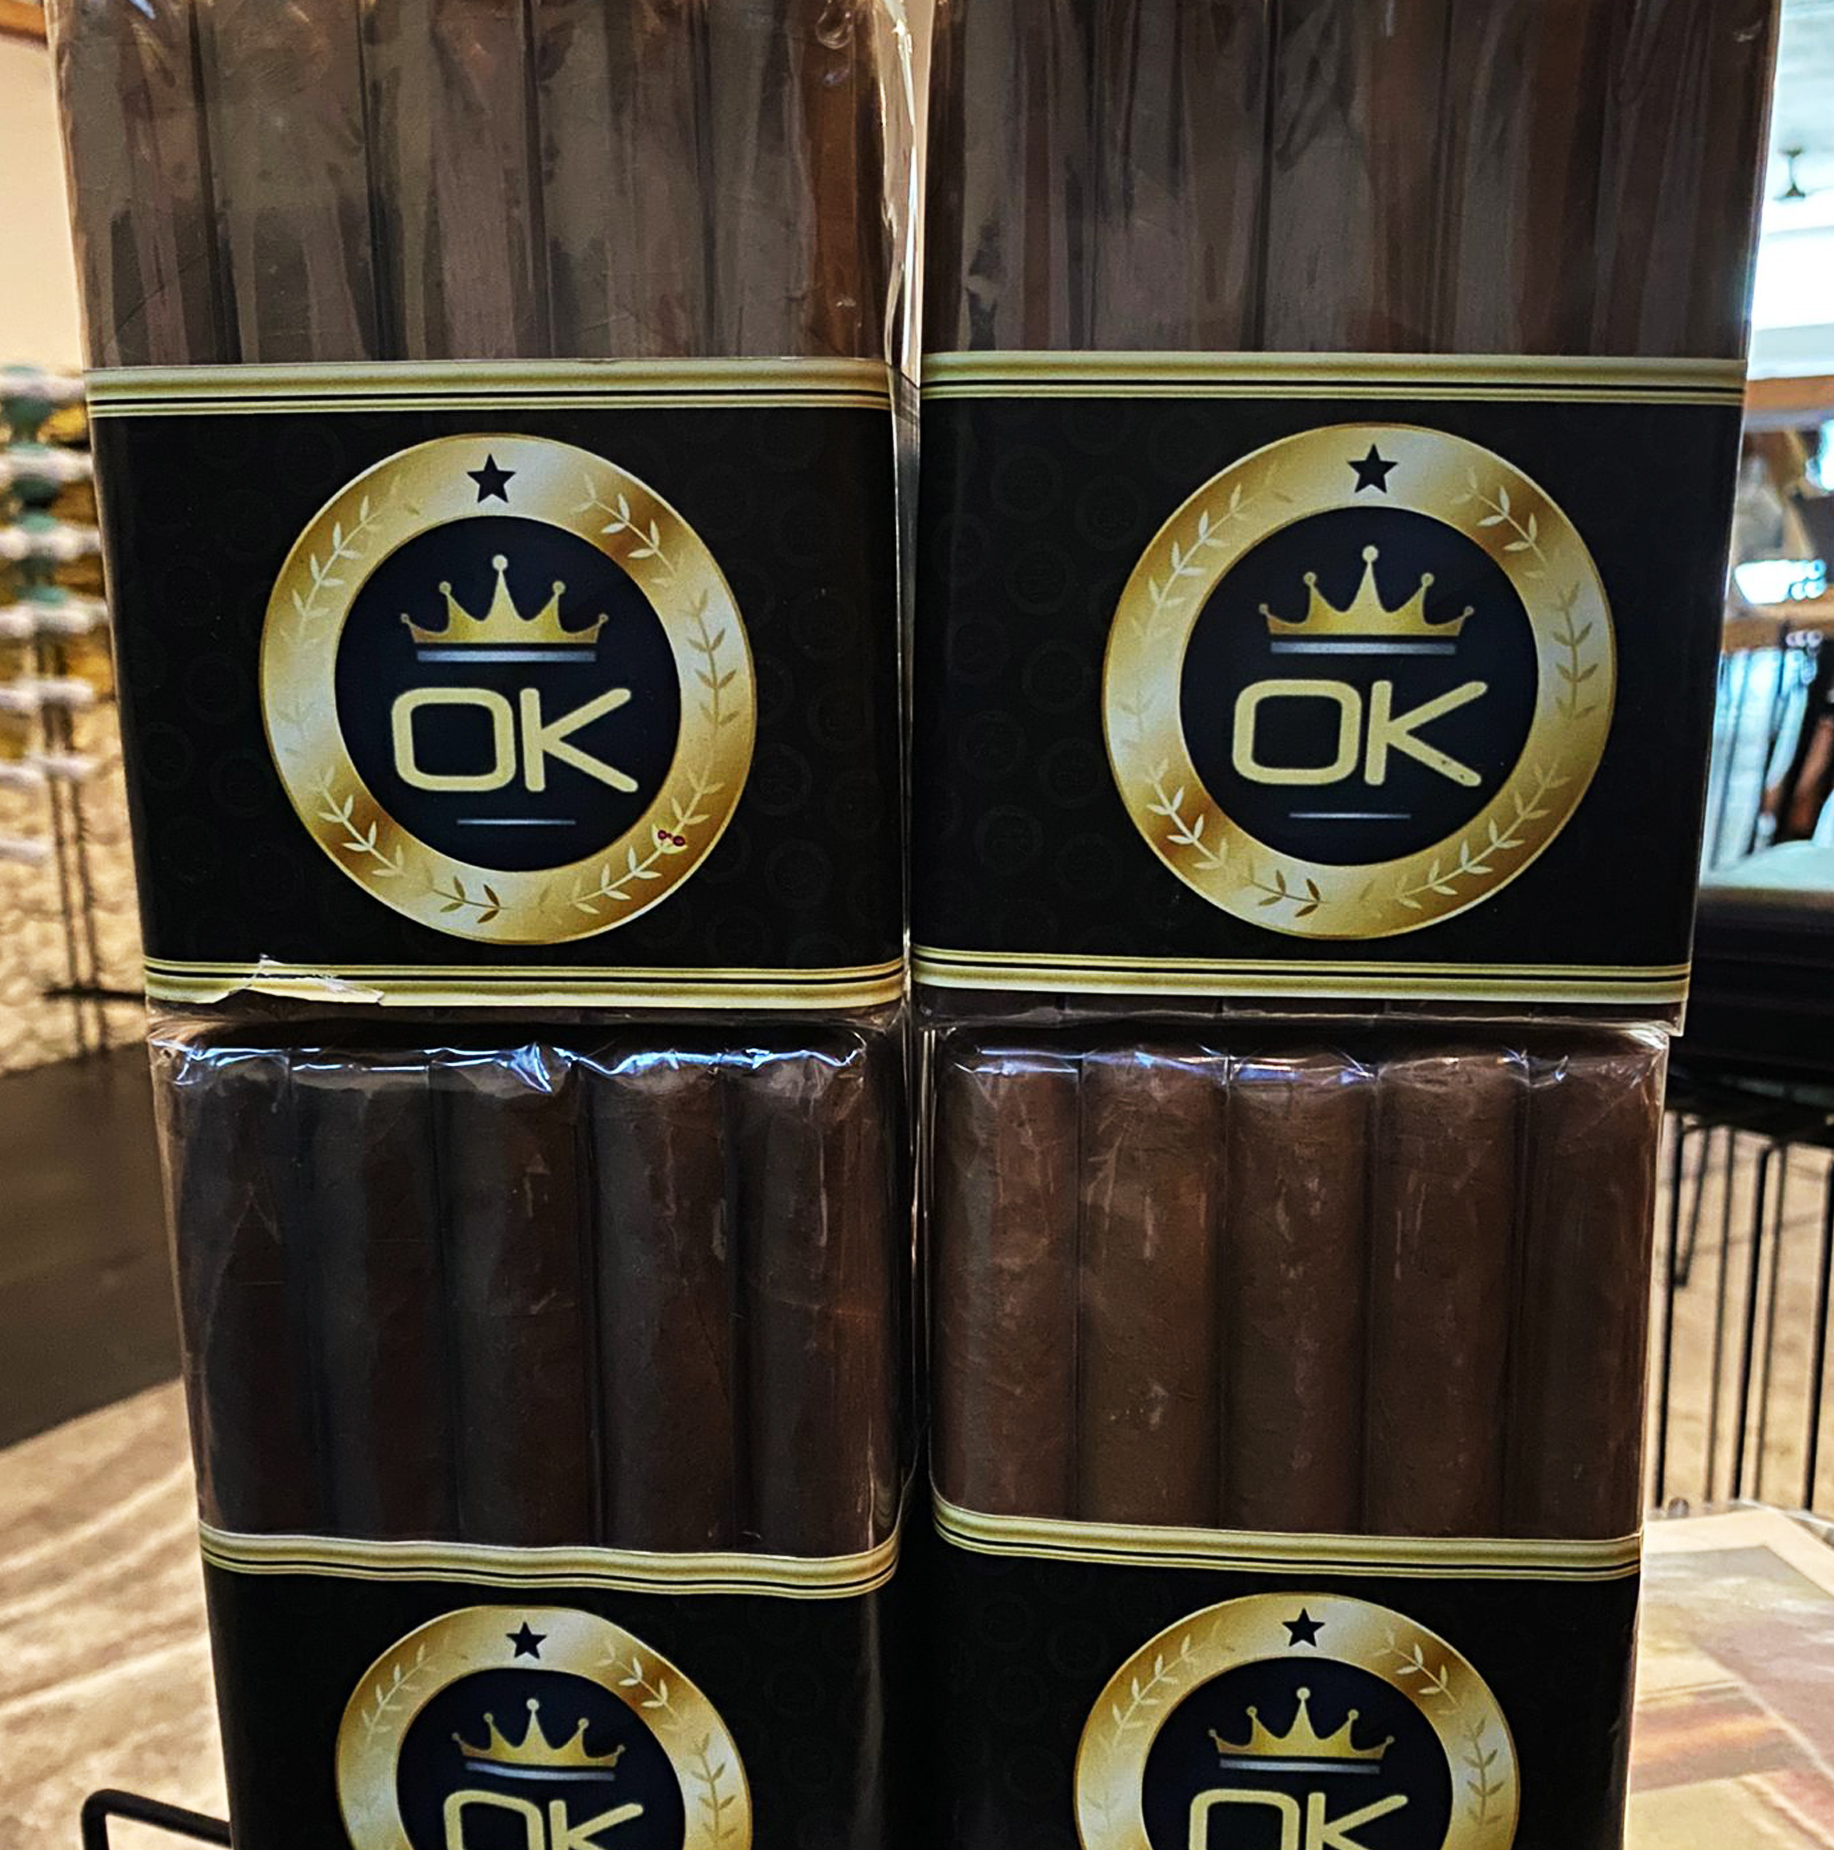 Our Kingdom Cigars Menu Options